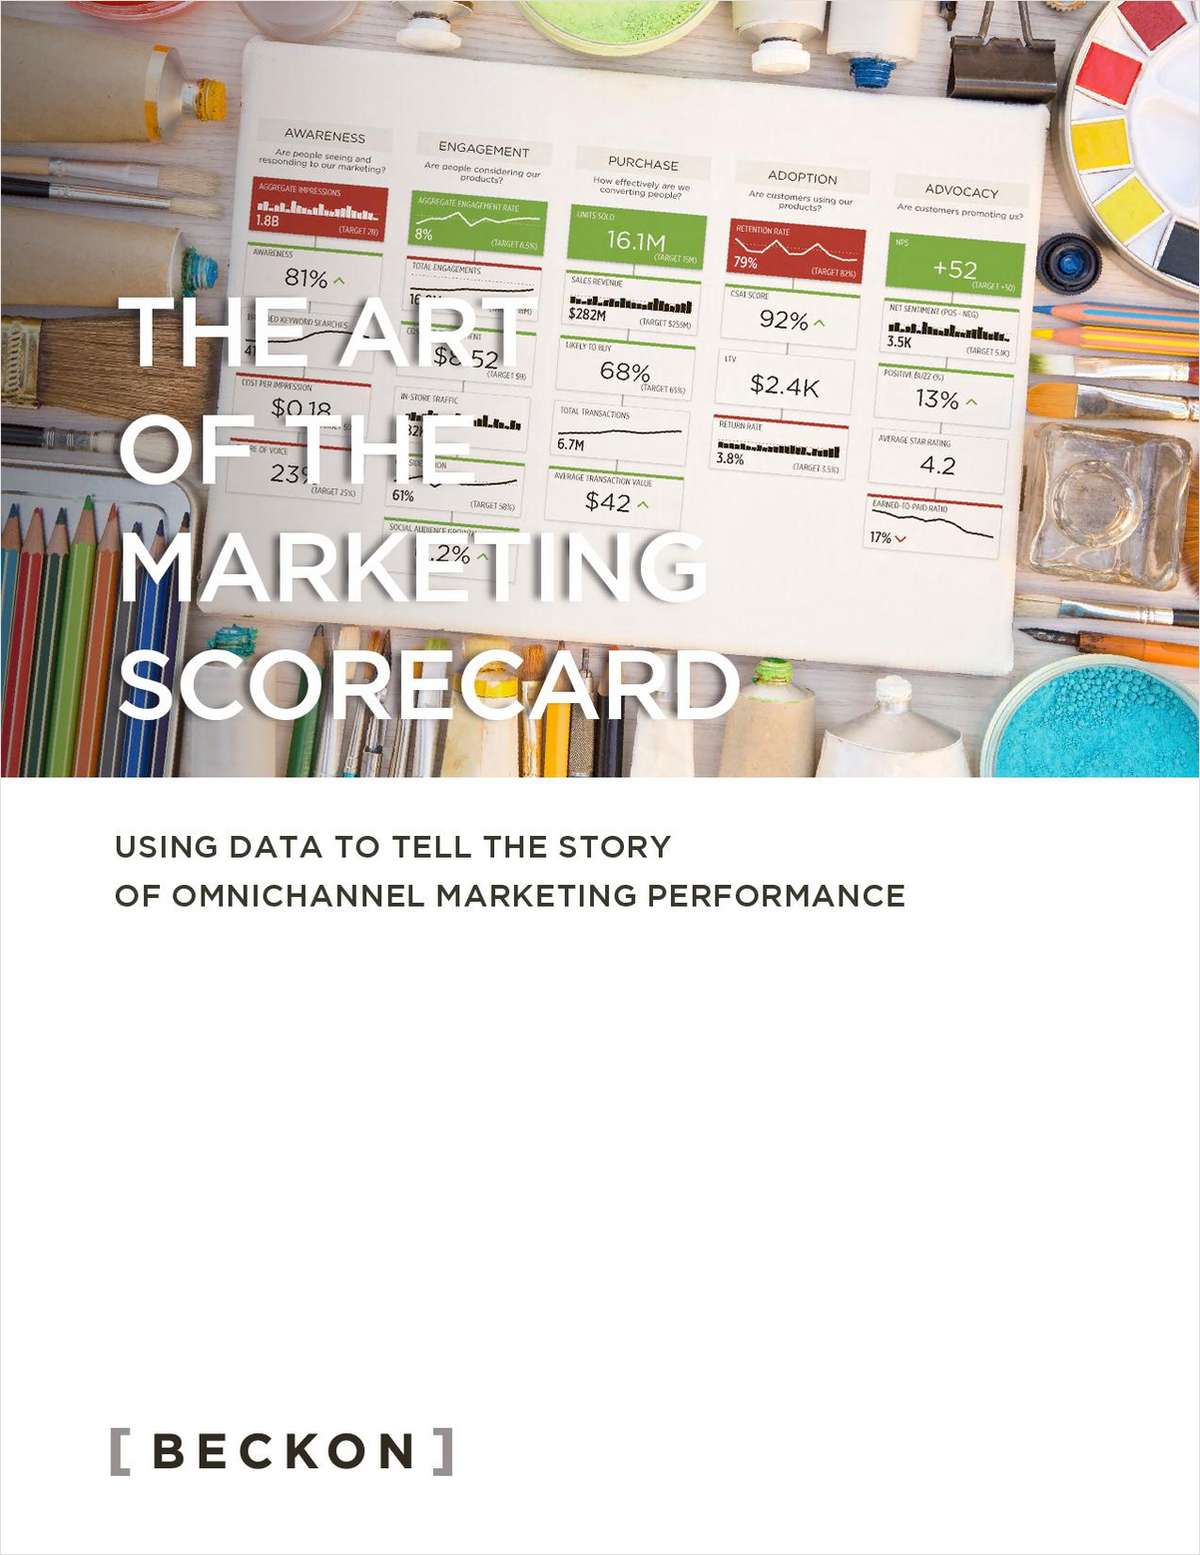 The Art of the Marketing Scorecard